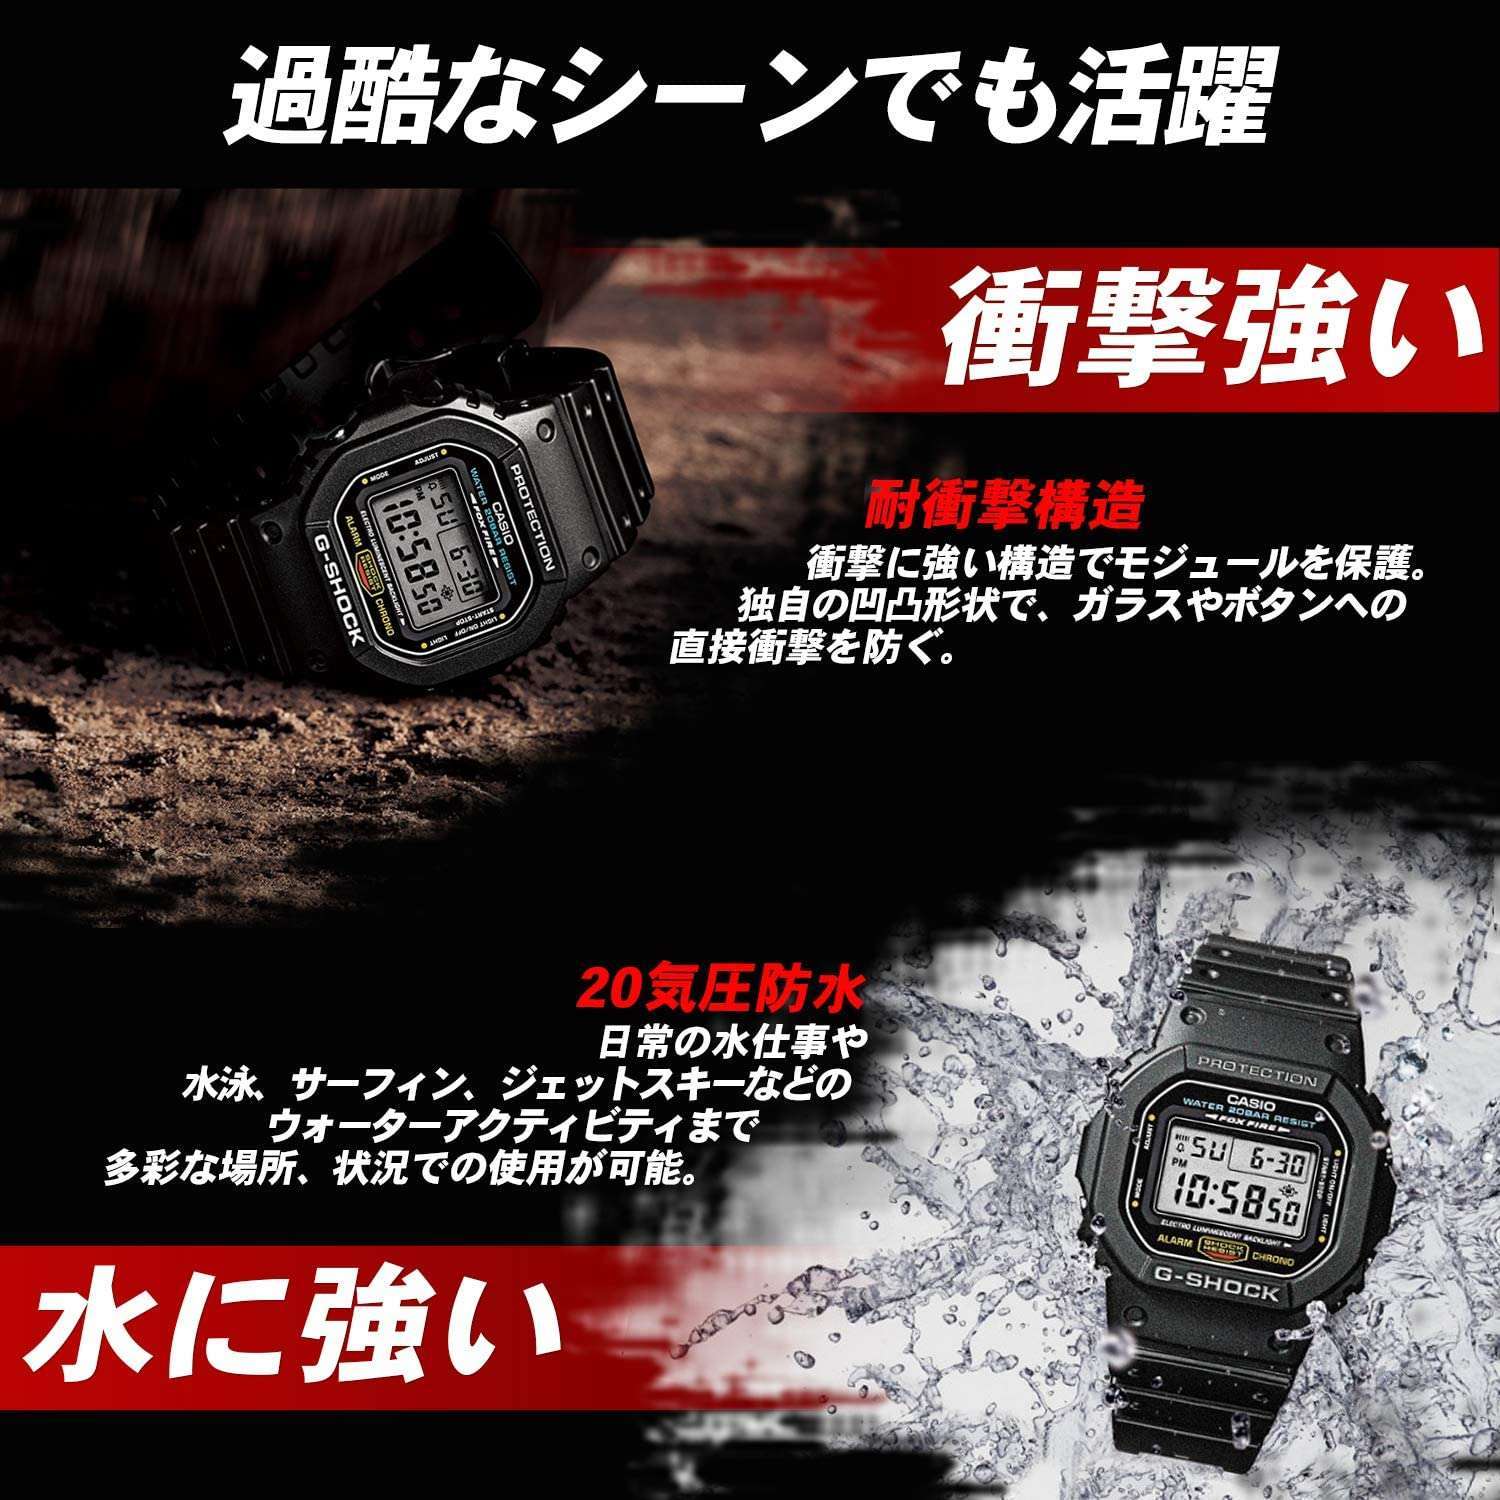 ROOK JAPAN:CASIO G-SHOCK MT-G BLUETOOTH JDM MEN WATCH MTG-B1000B-1A4JF,JDM Watch,Casio G-Shock